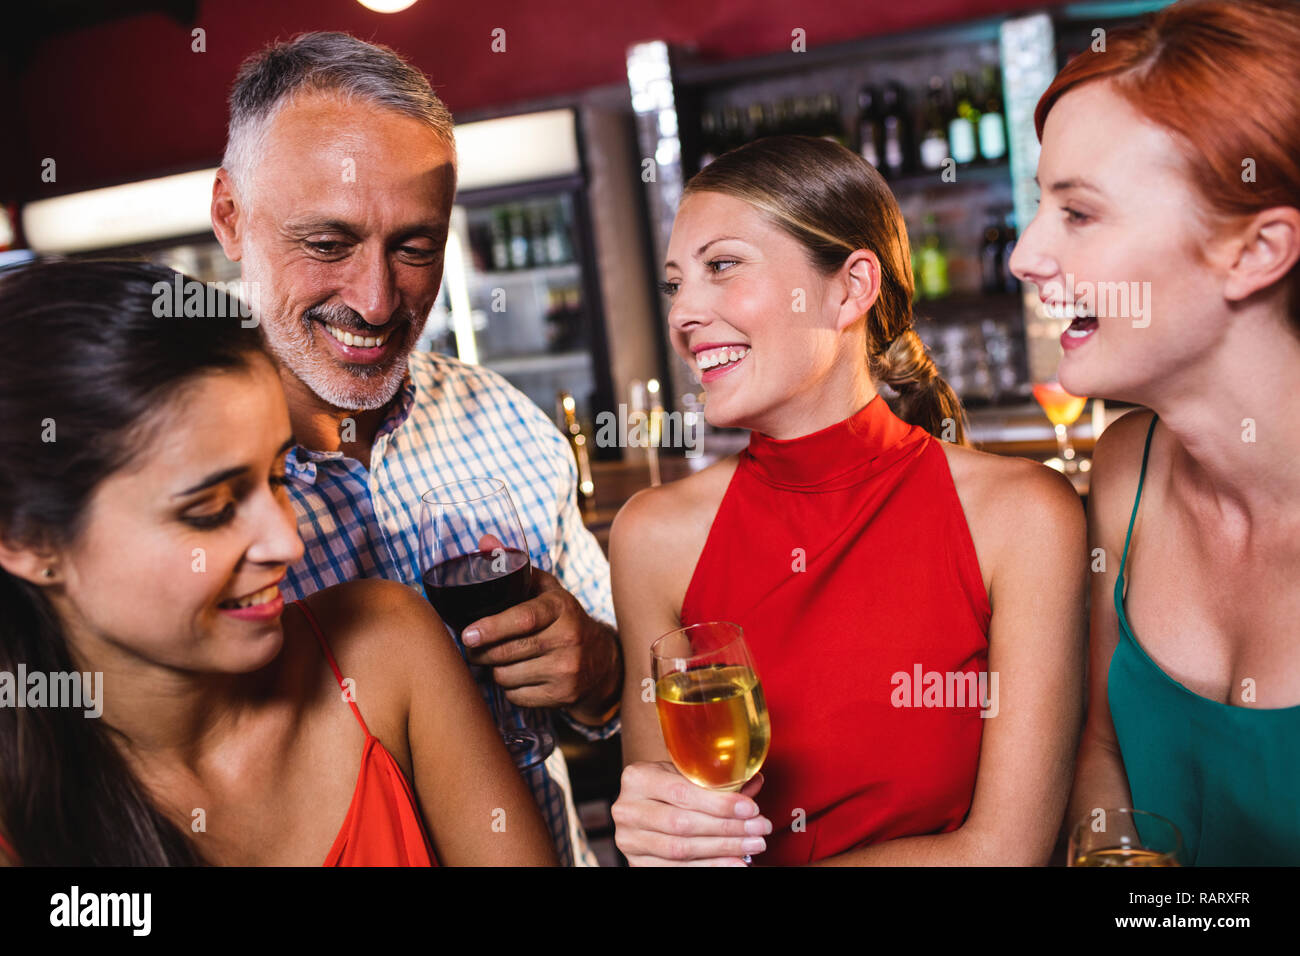 Friends enjoying wine in night club Stock Photo